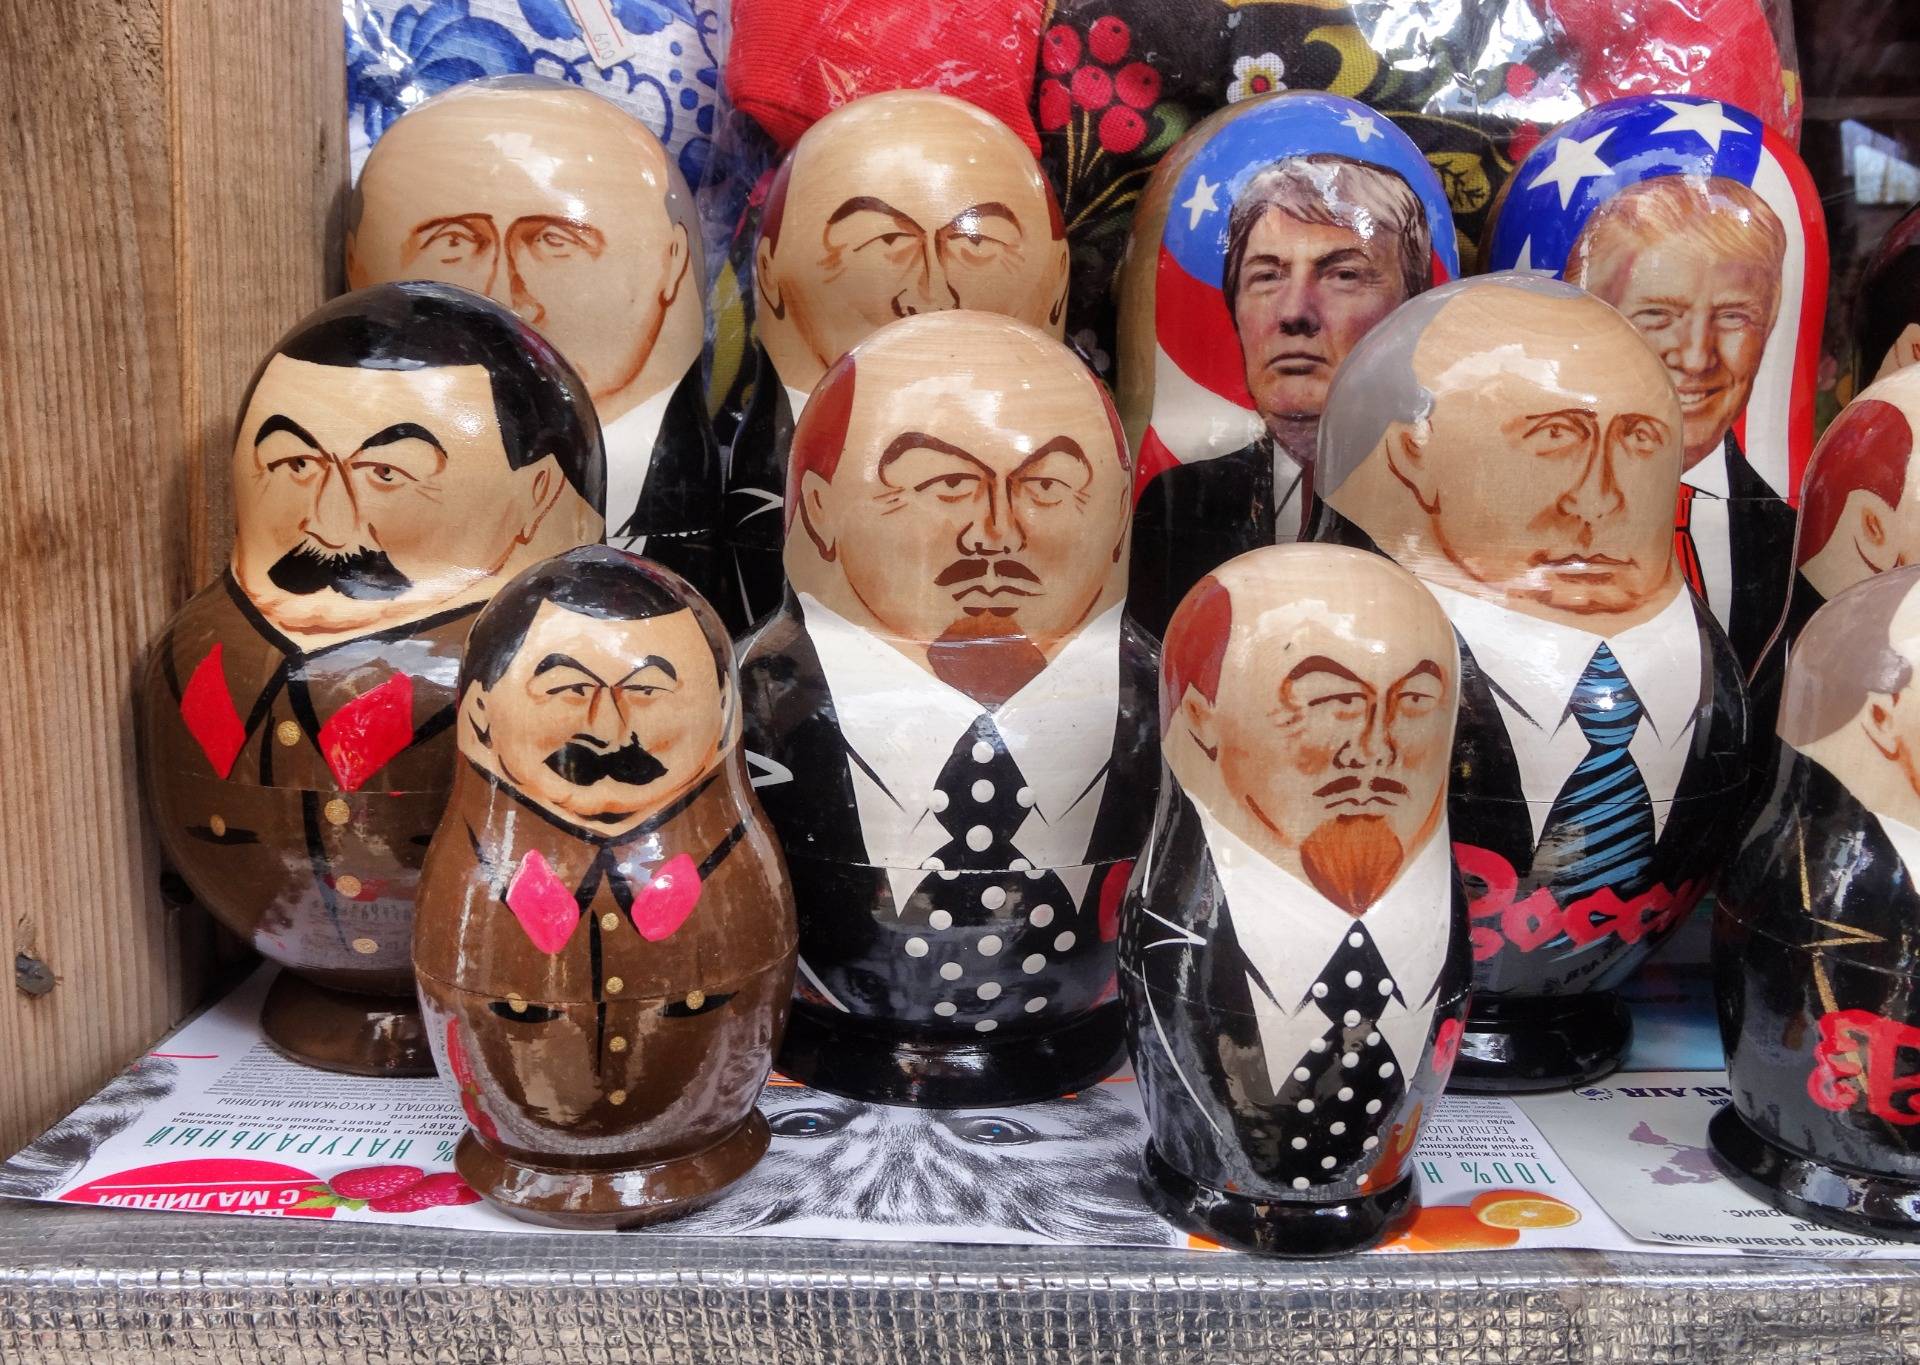 Dolls like these: Lenin & Stalin as a joke, Putin (right) too